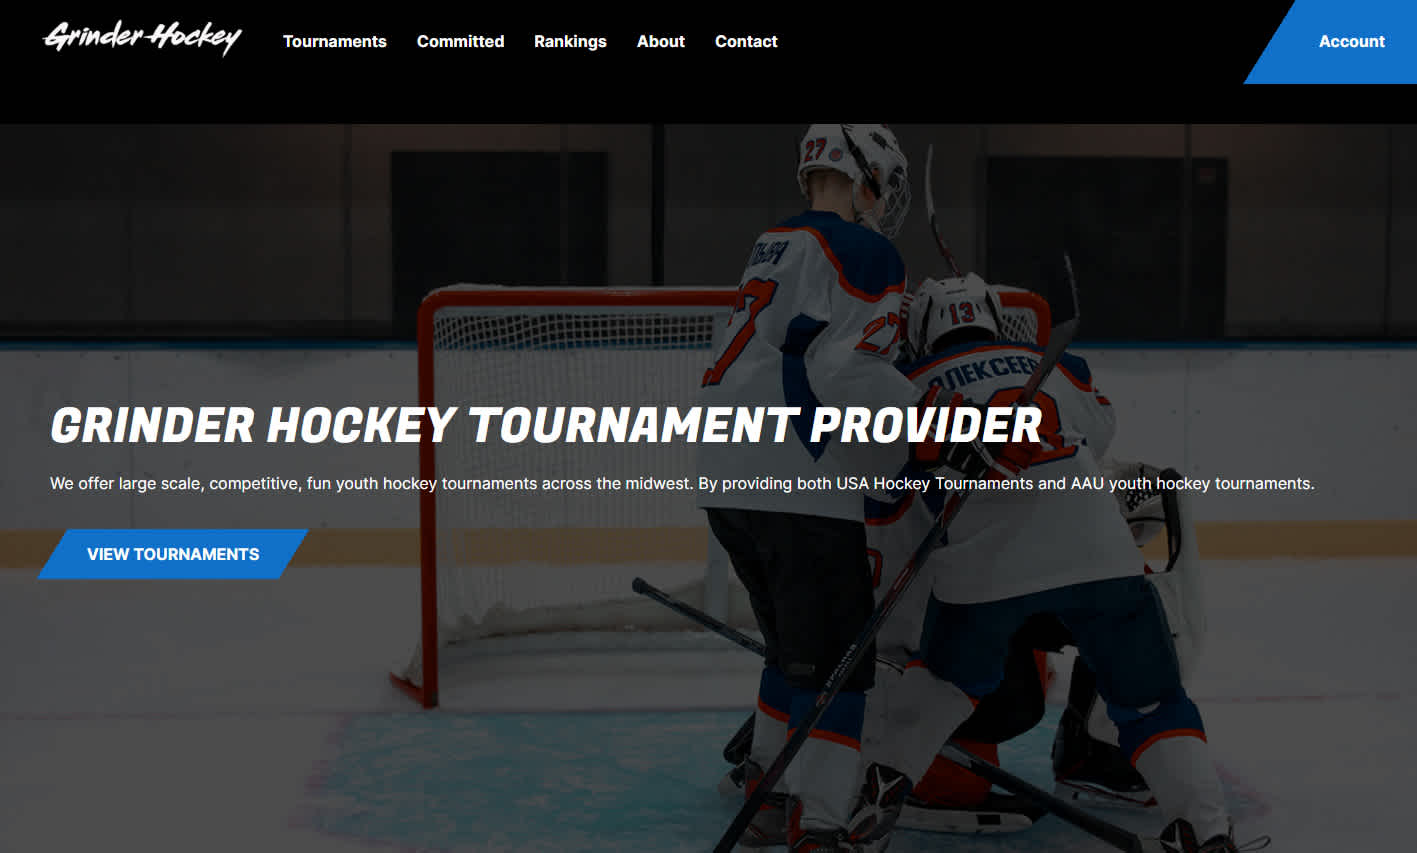 Grinder Hockey home page screenshot